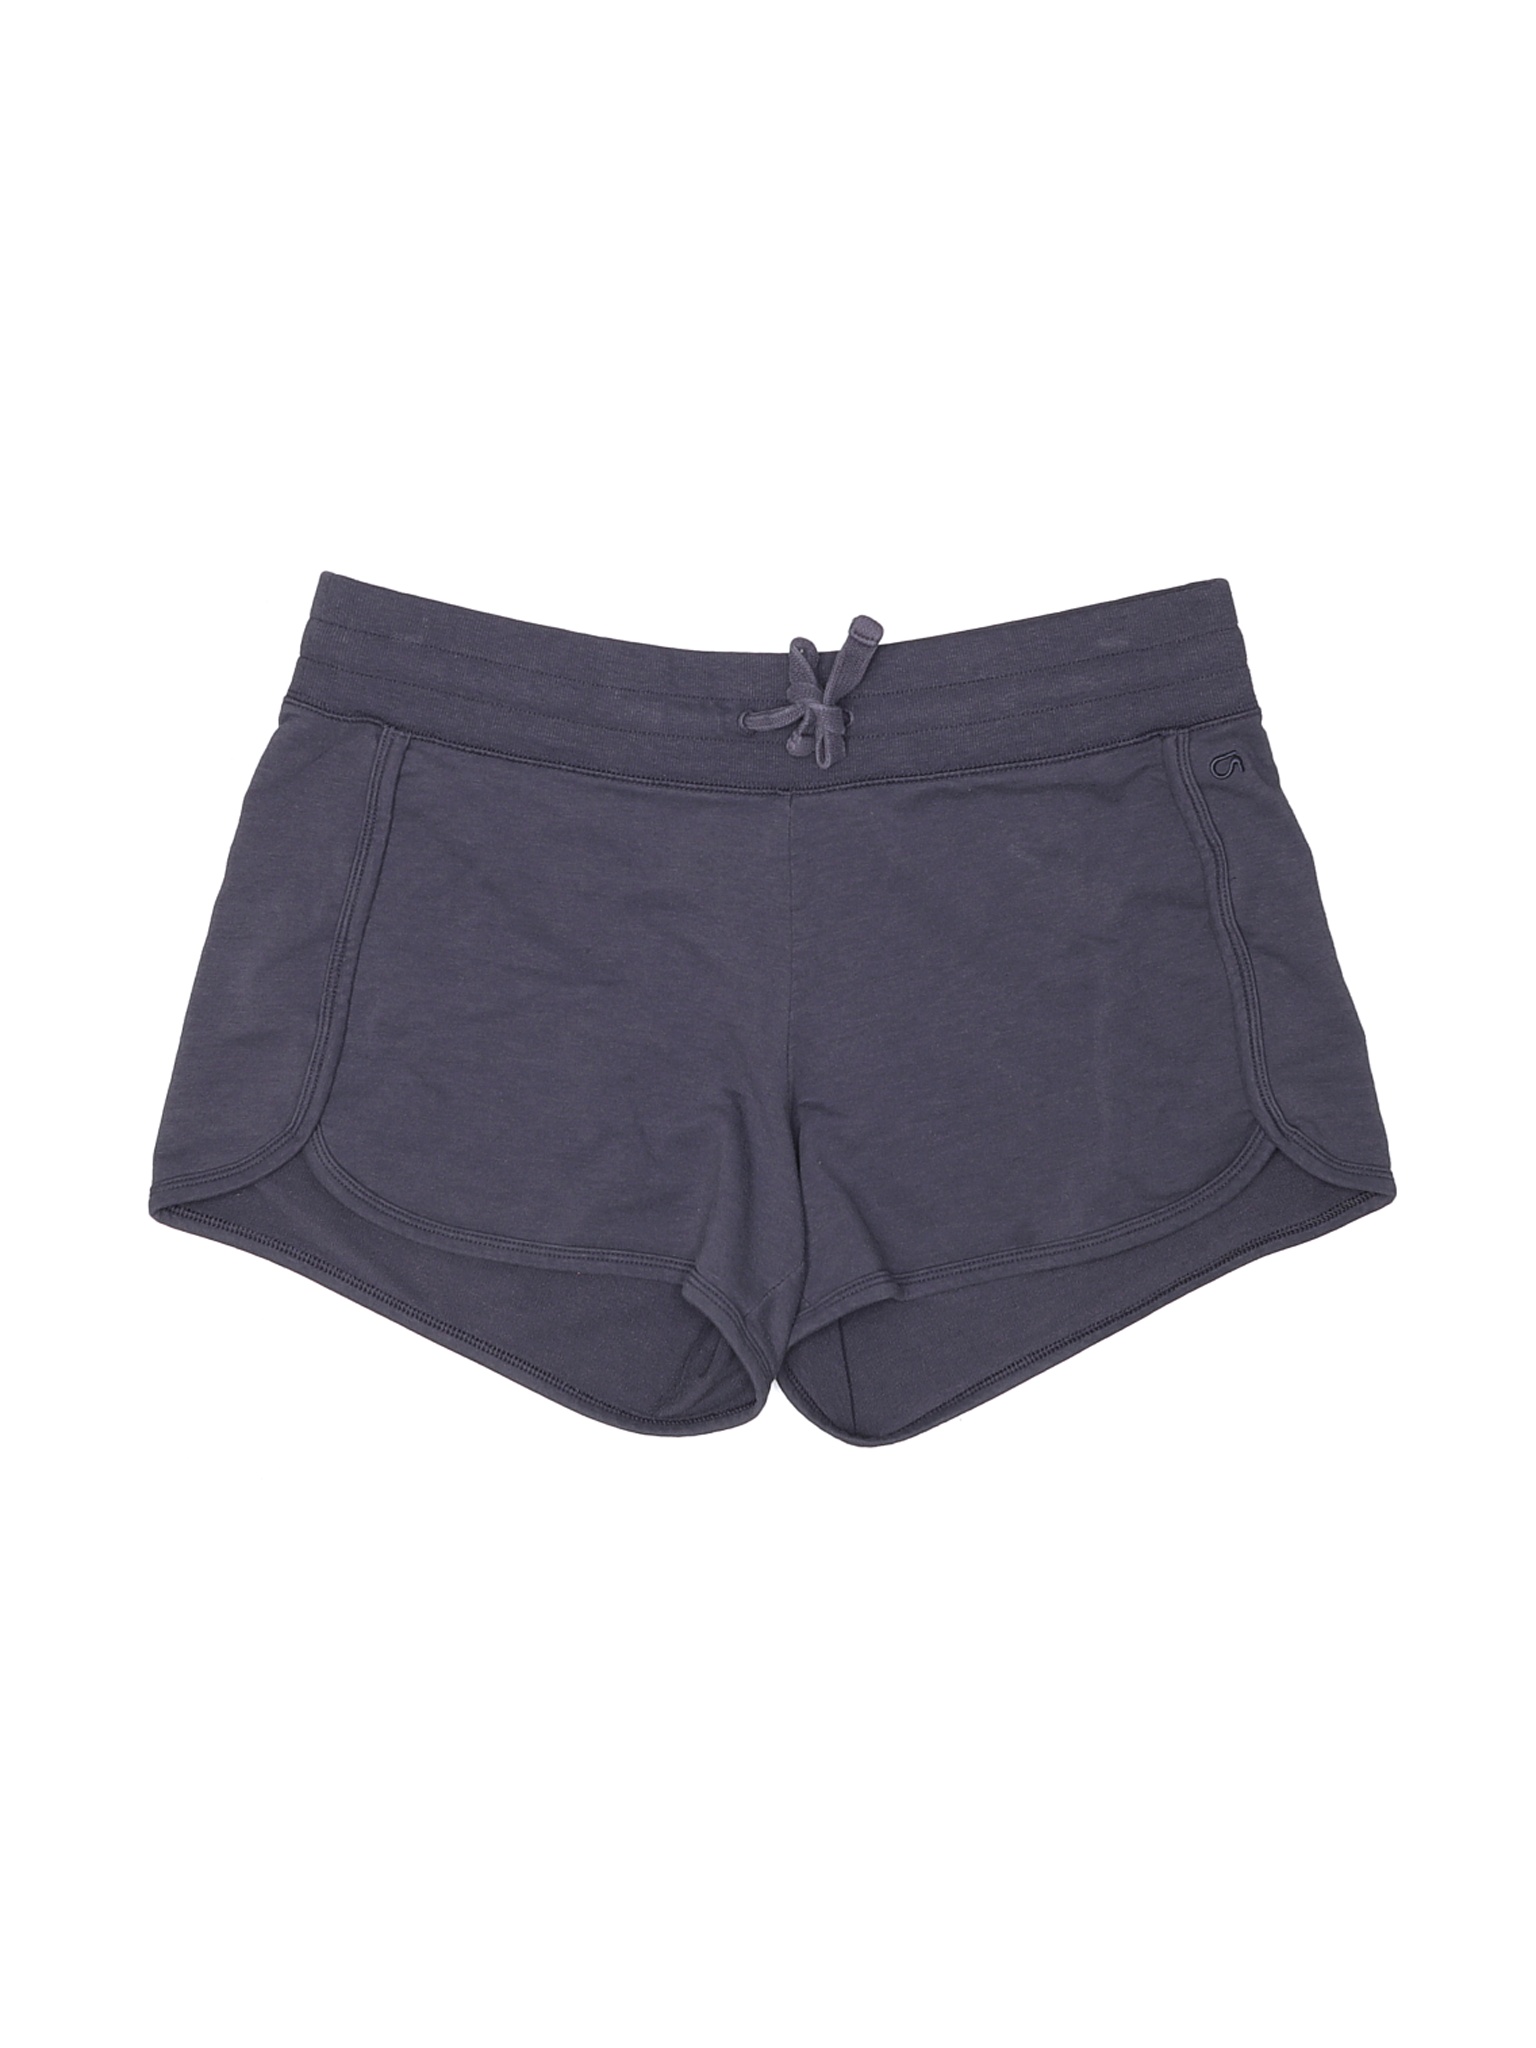 Gap Fit Women Blue Athletic Shorts M | eBay